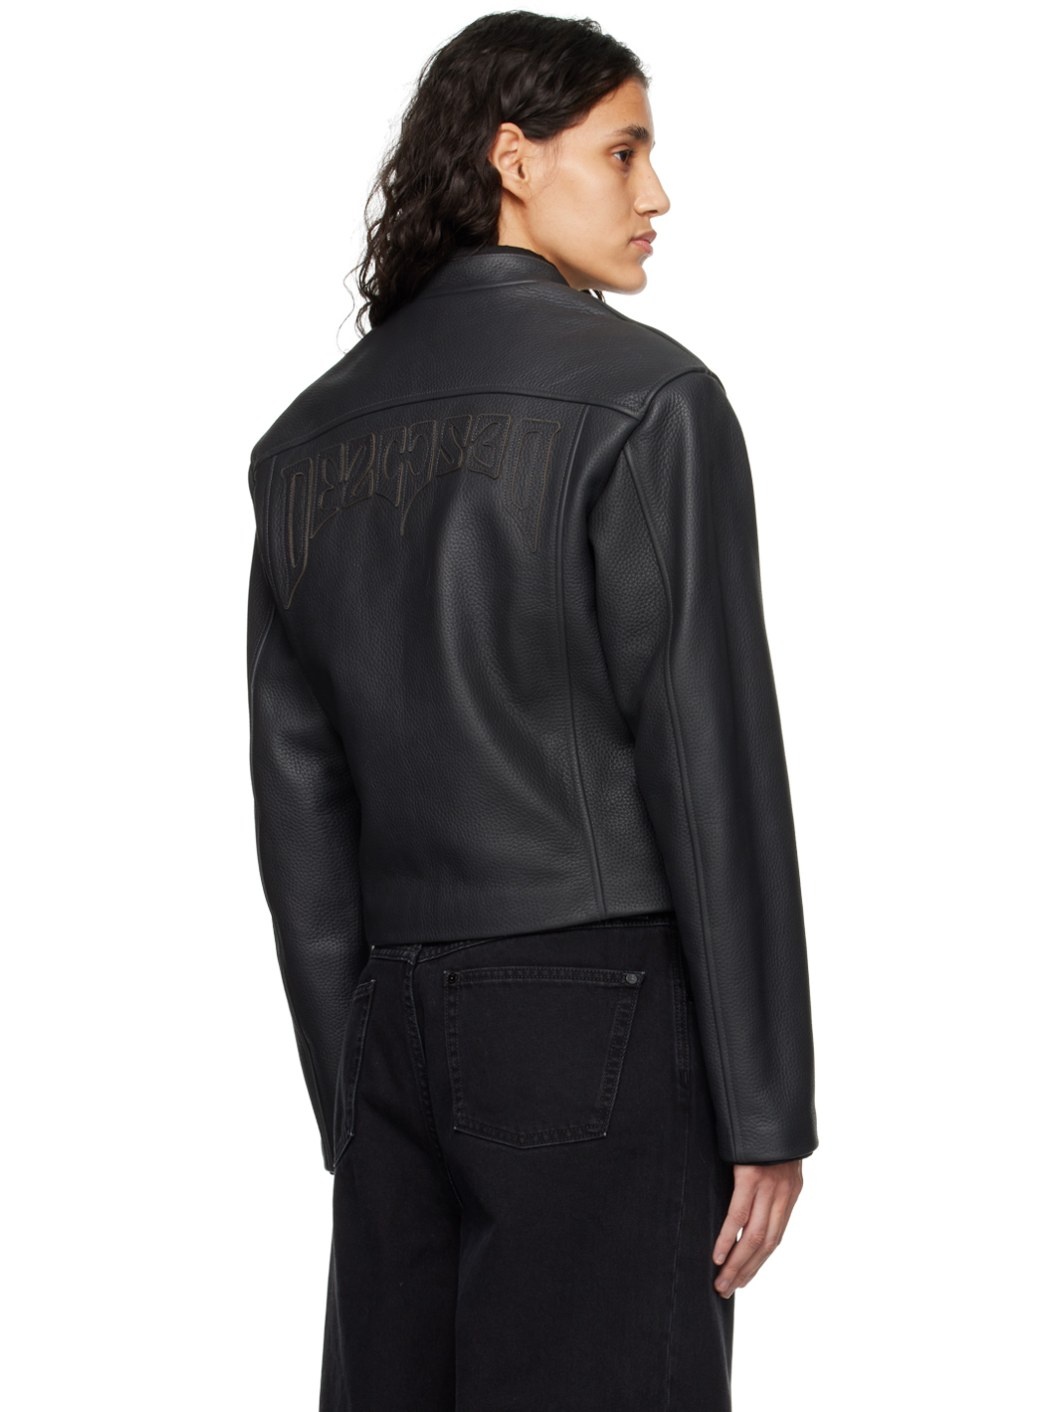 Black Attrition Leather Jacket - 3